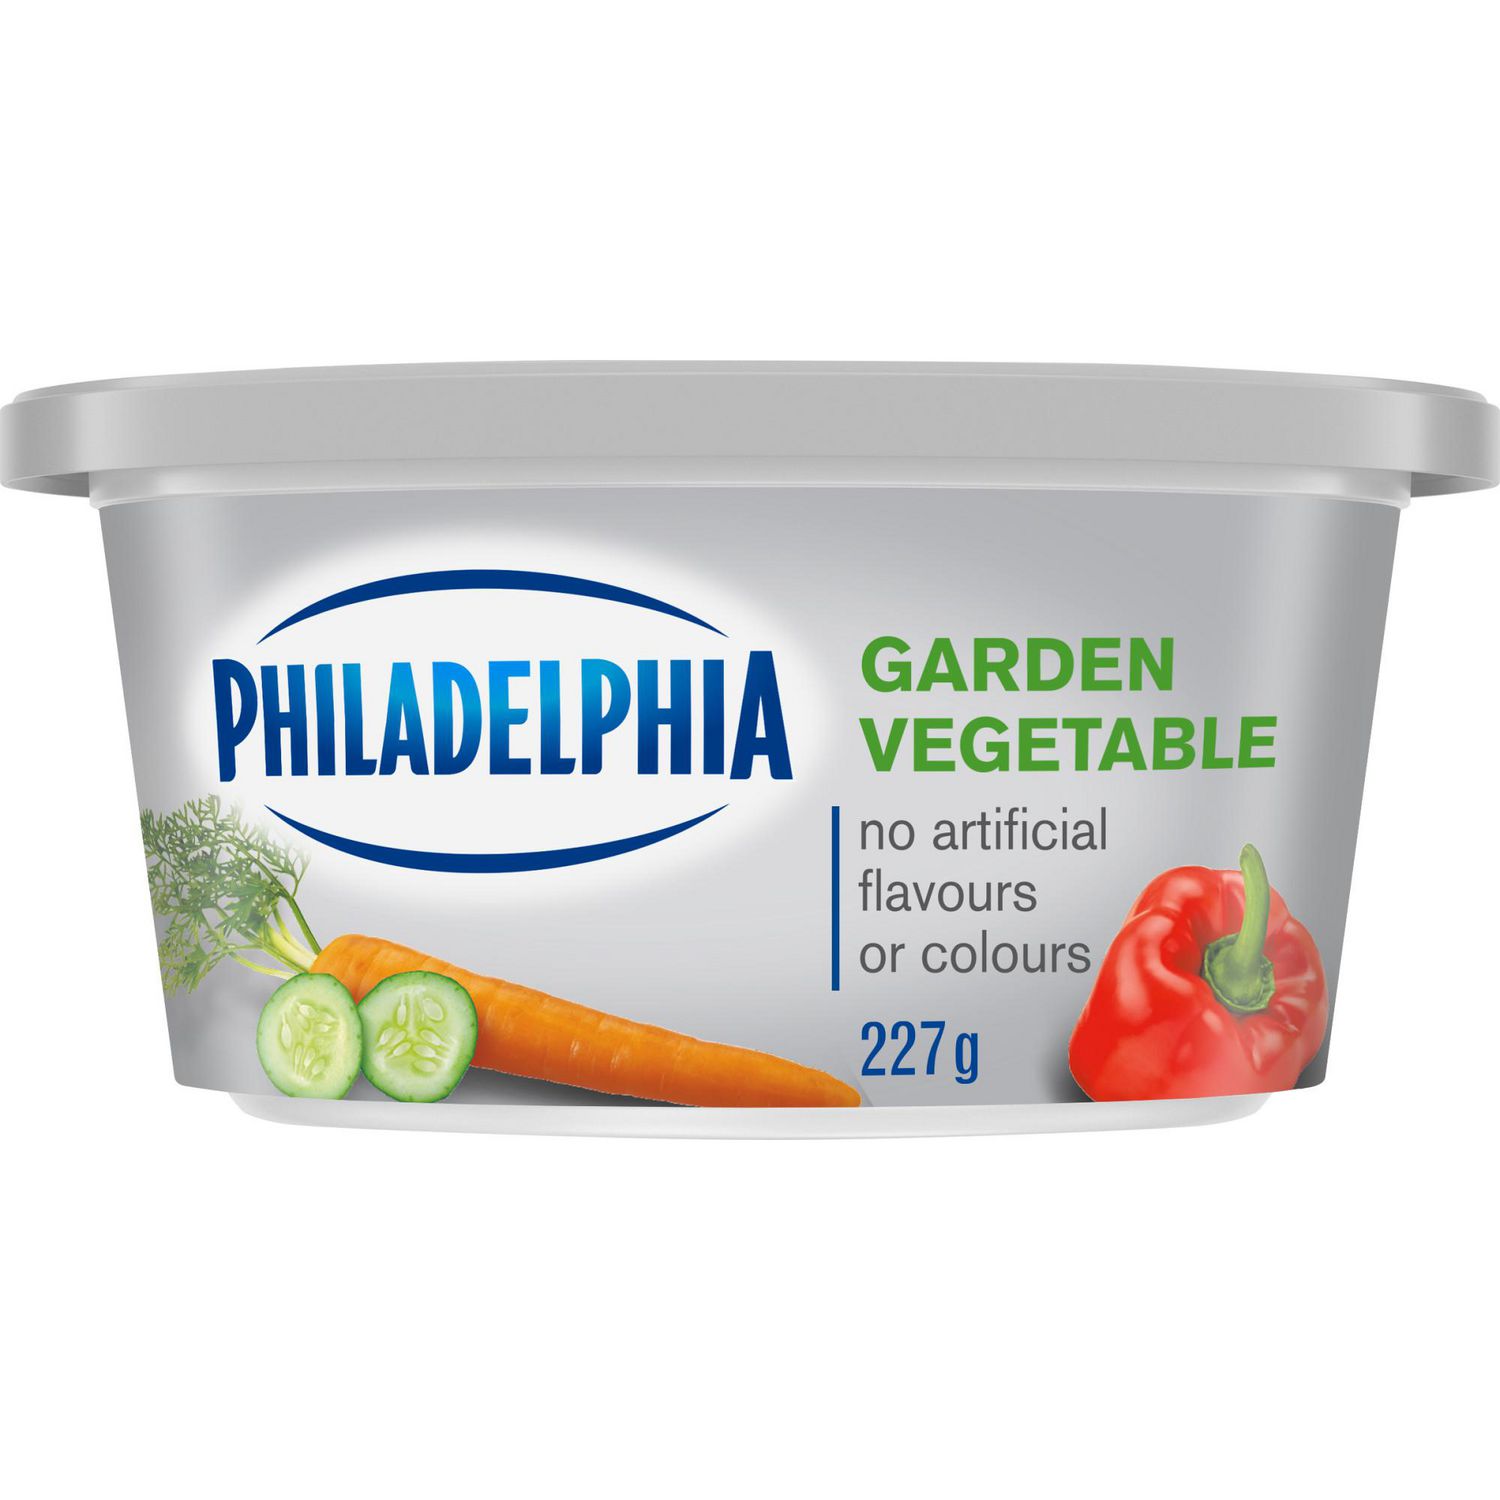 Philadelphia Garden Vegetable Cream Cheese Walmart Canada